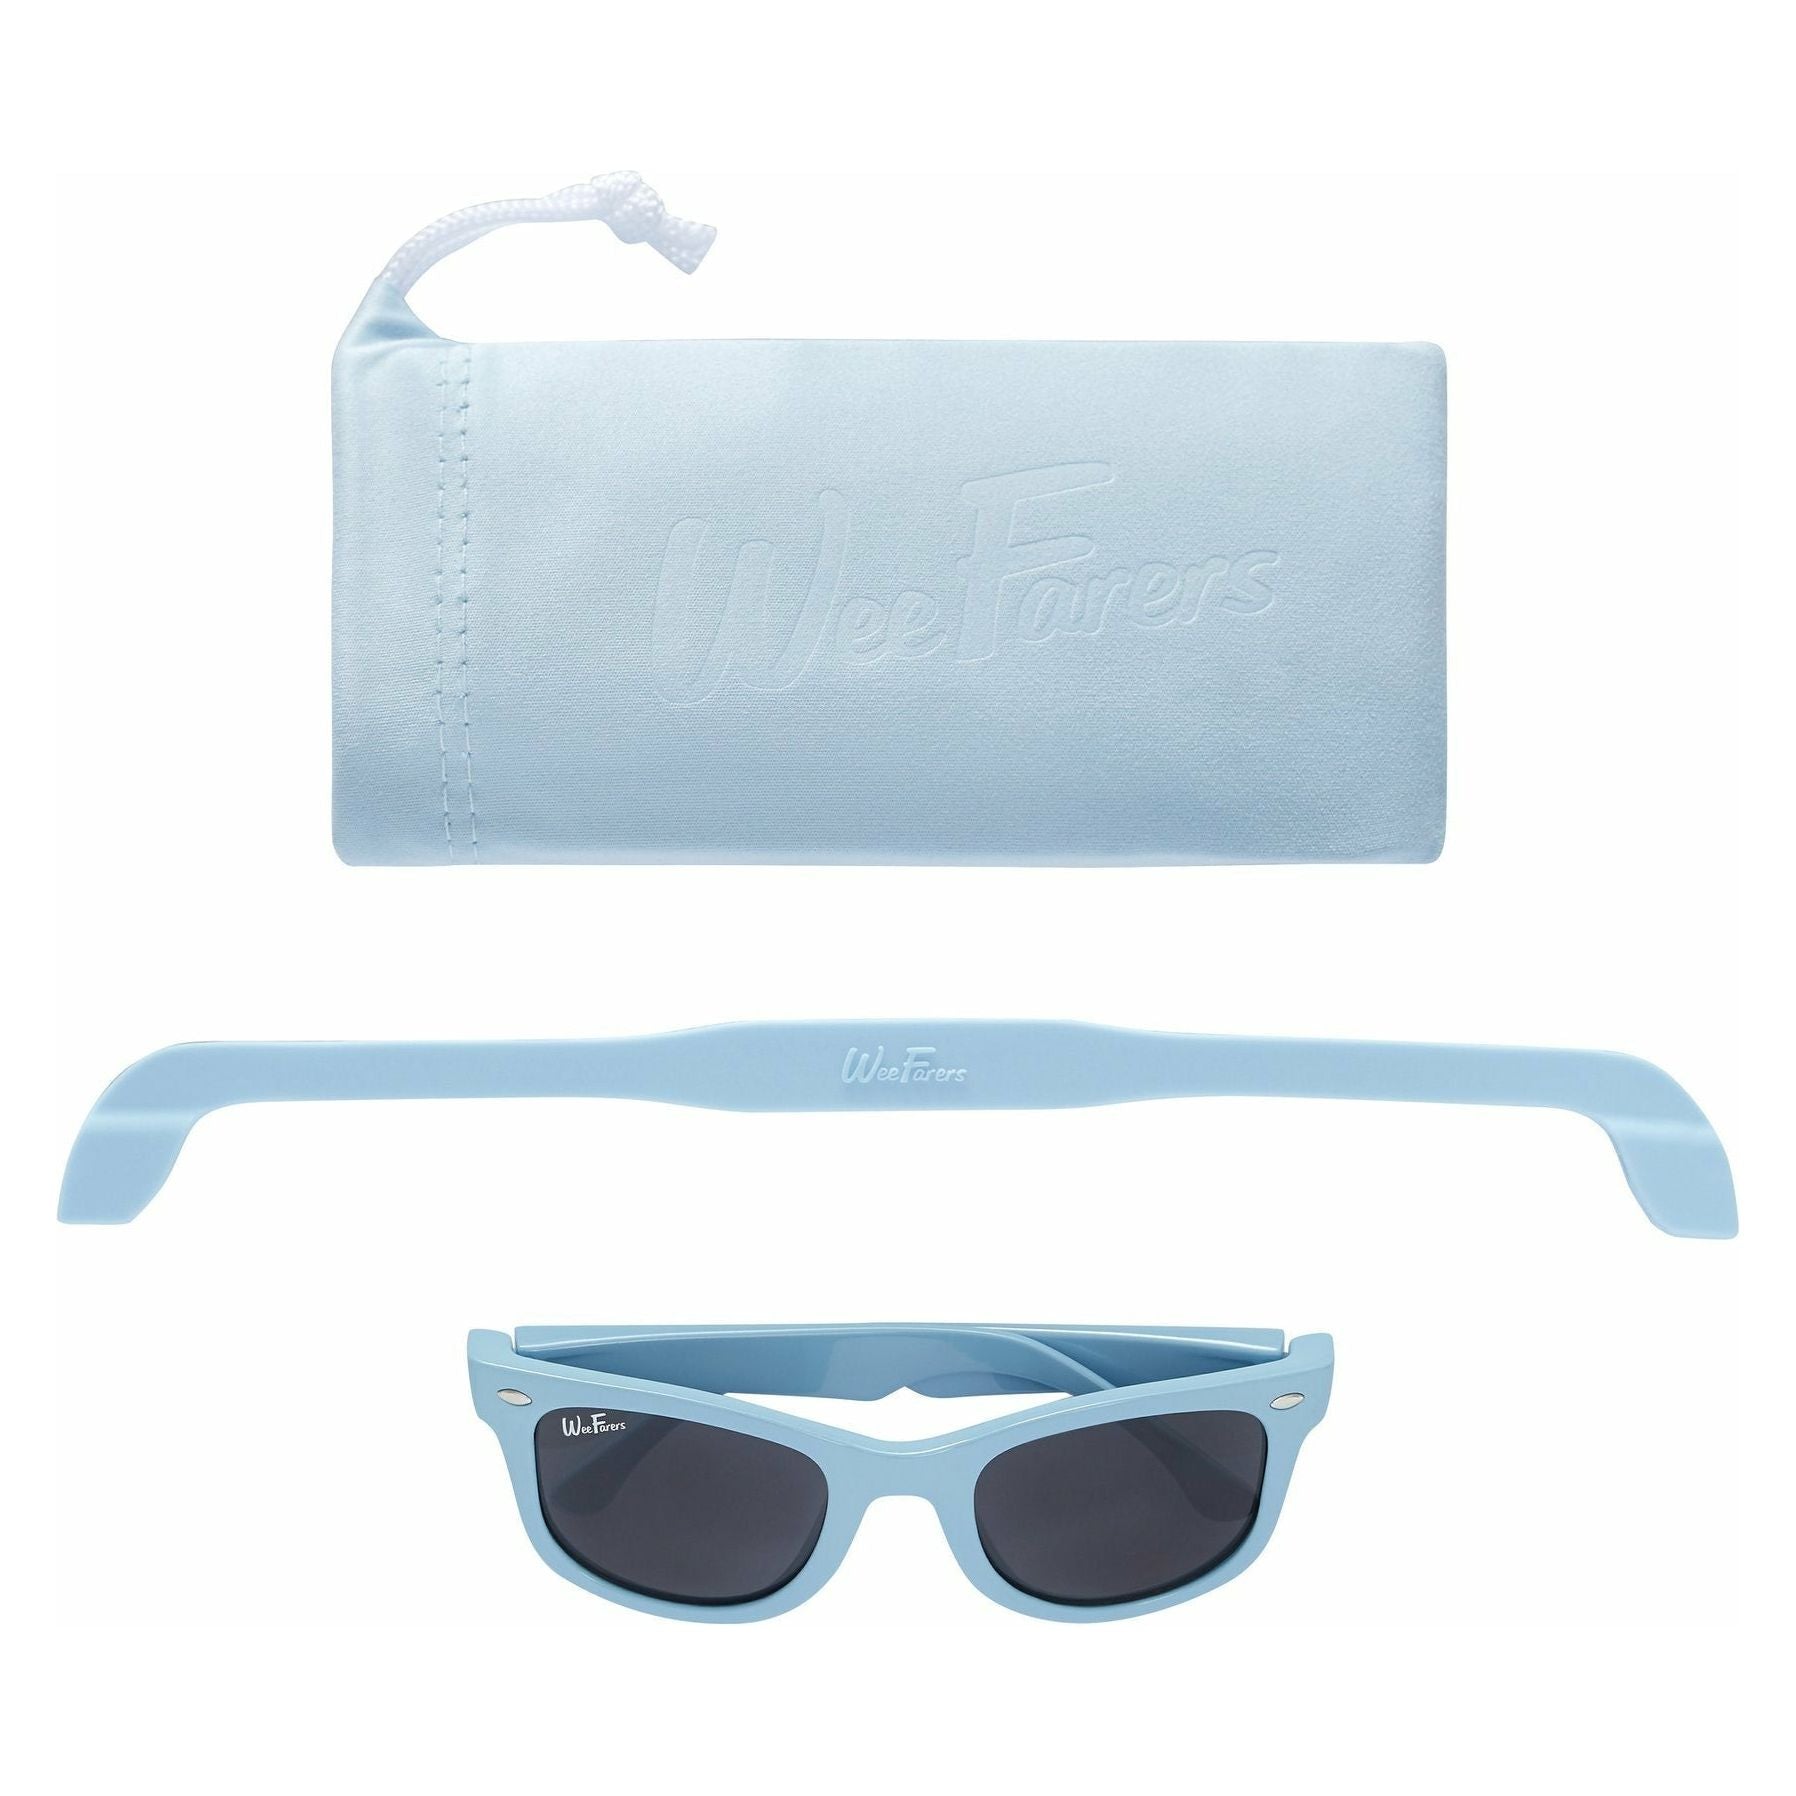 Sunglasses - Blue - Collins & Conley